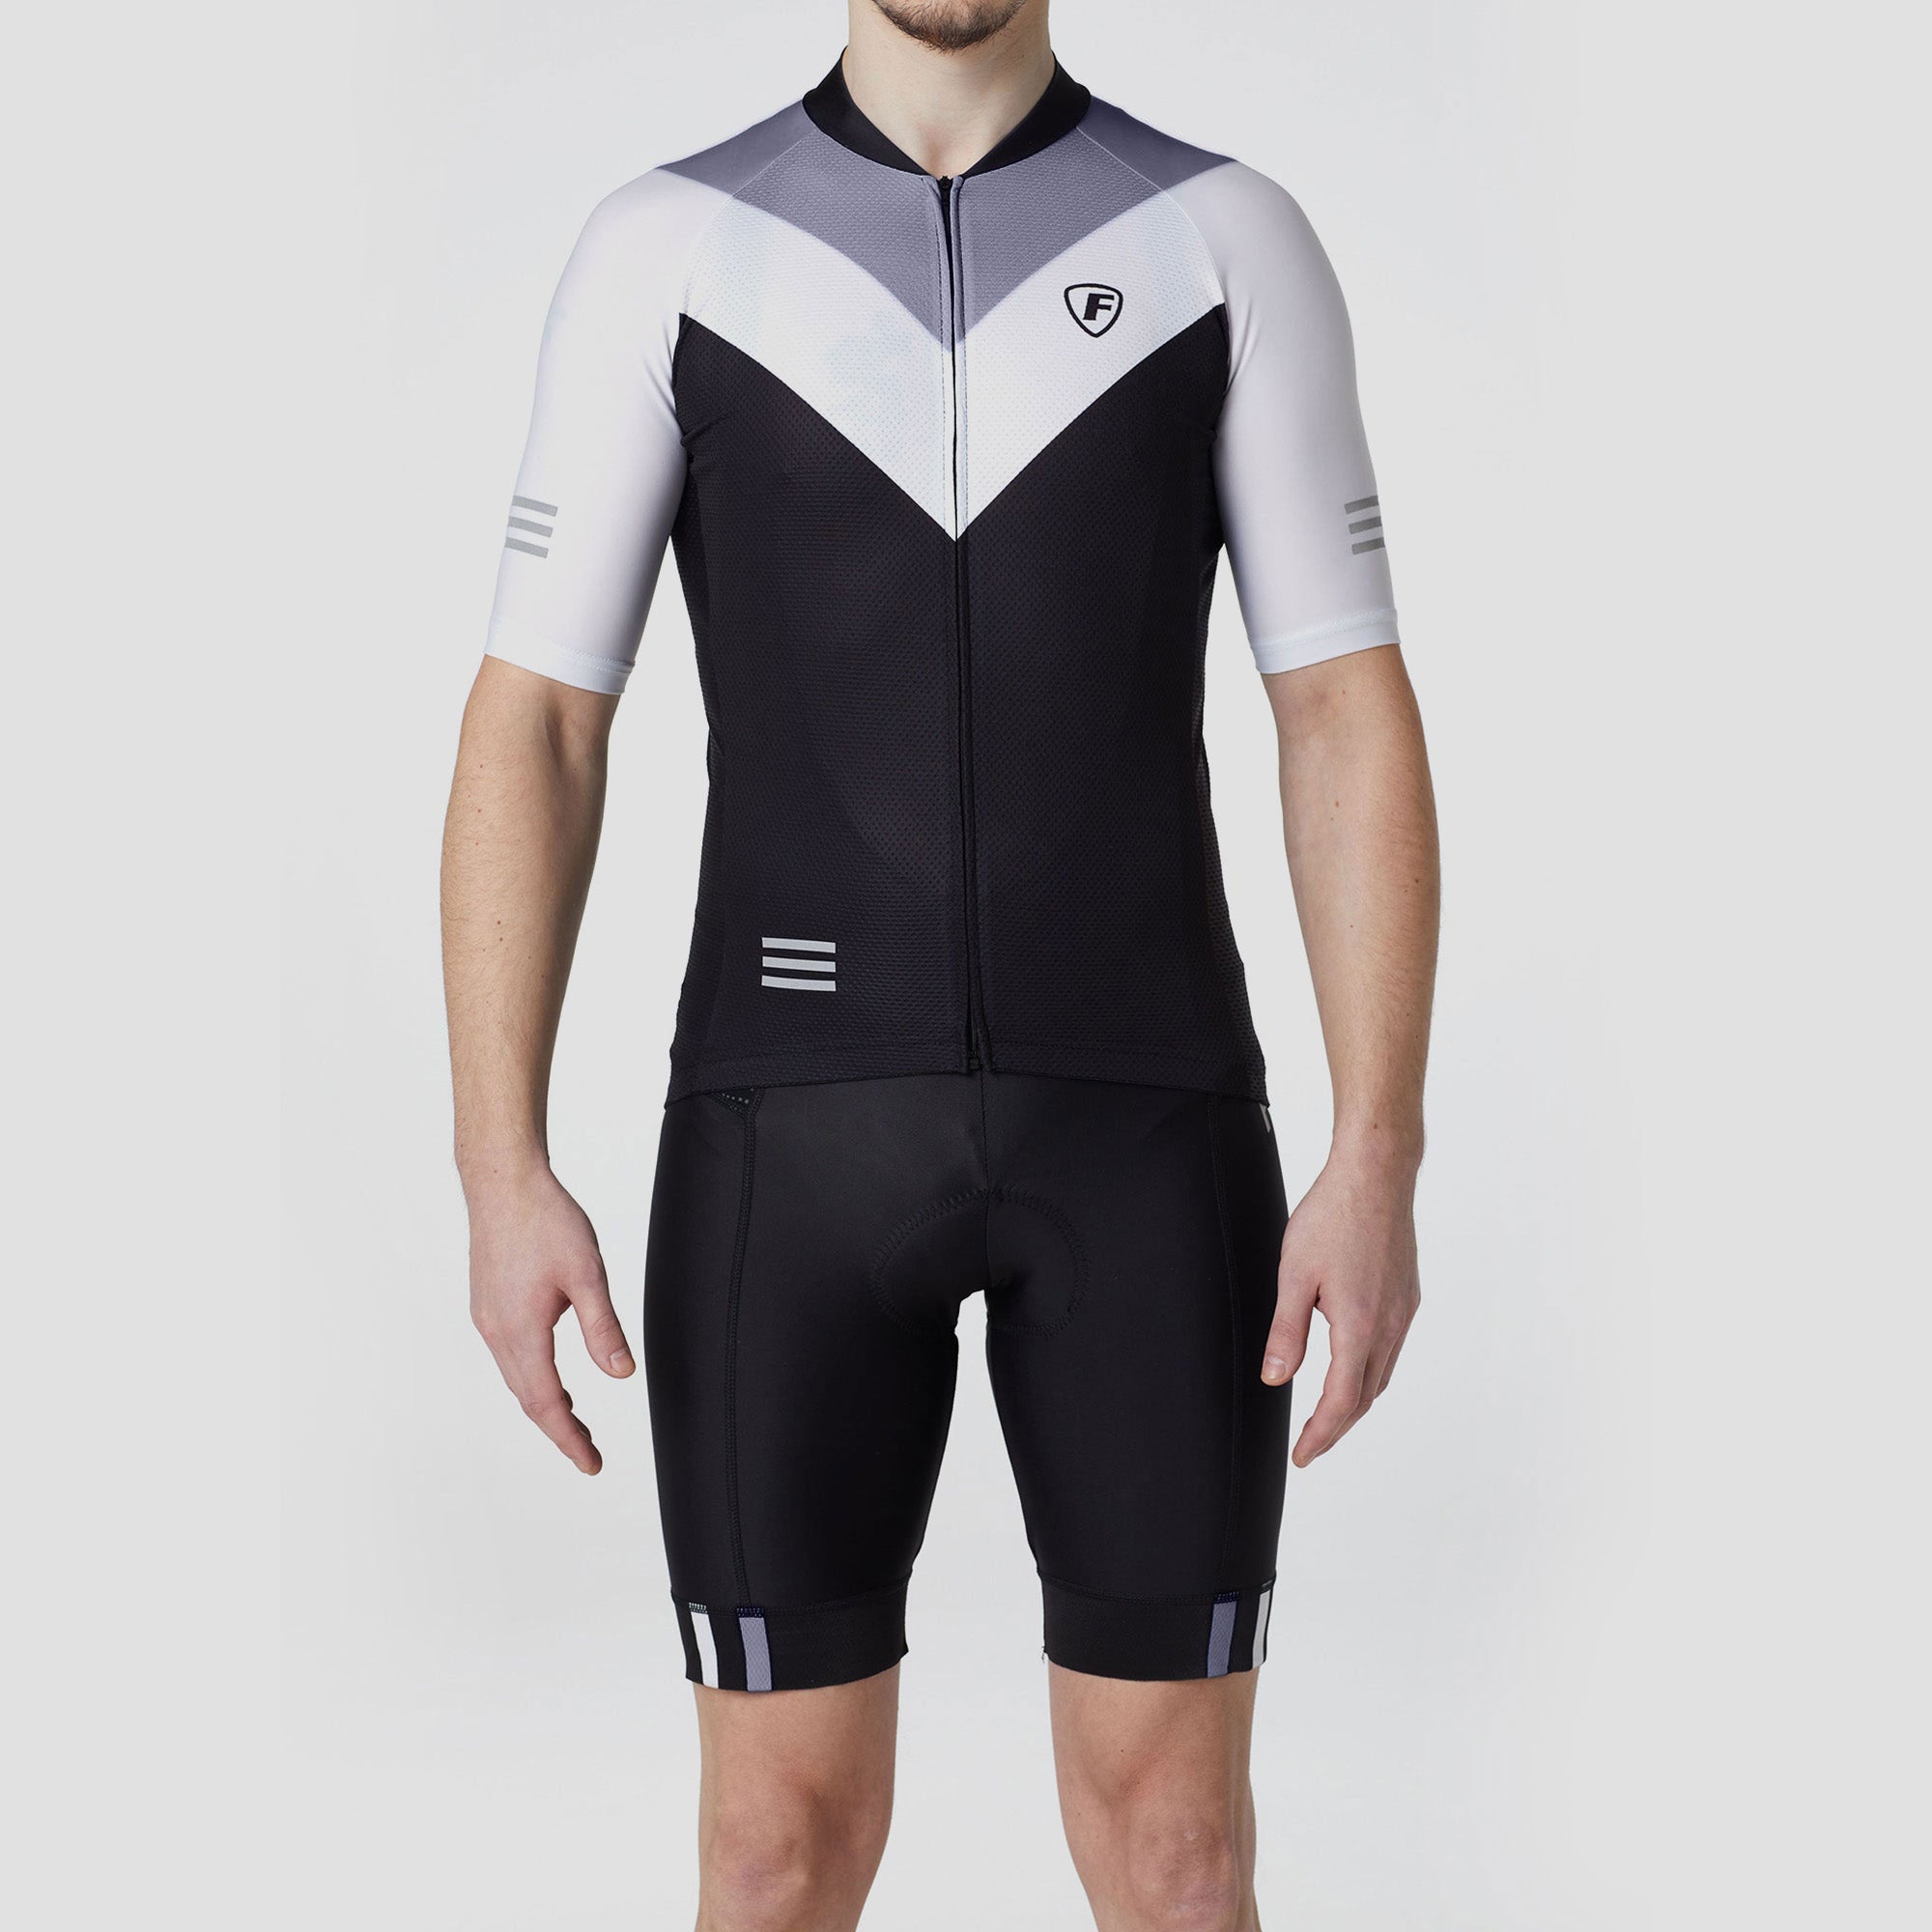 Fdx Men's Set Velos Grey Short Sleeve Summer Cycling Jersey & Cargo Bib Shorts